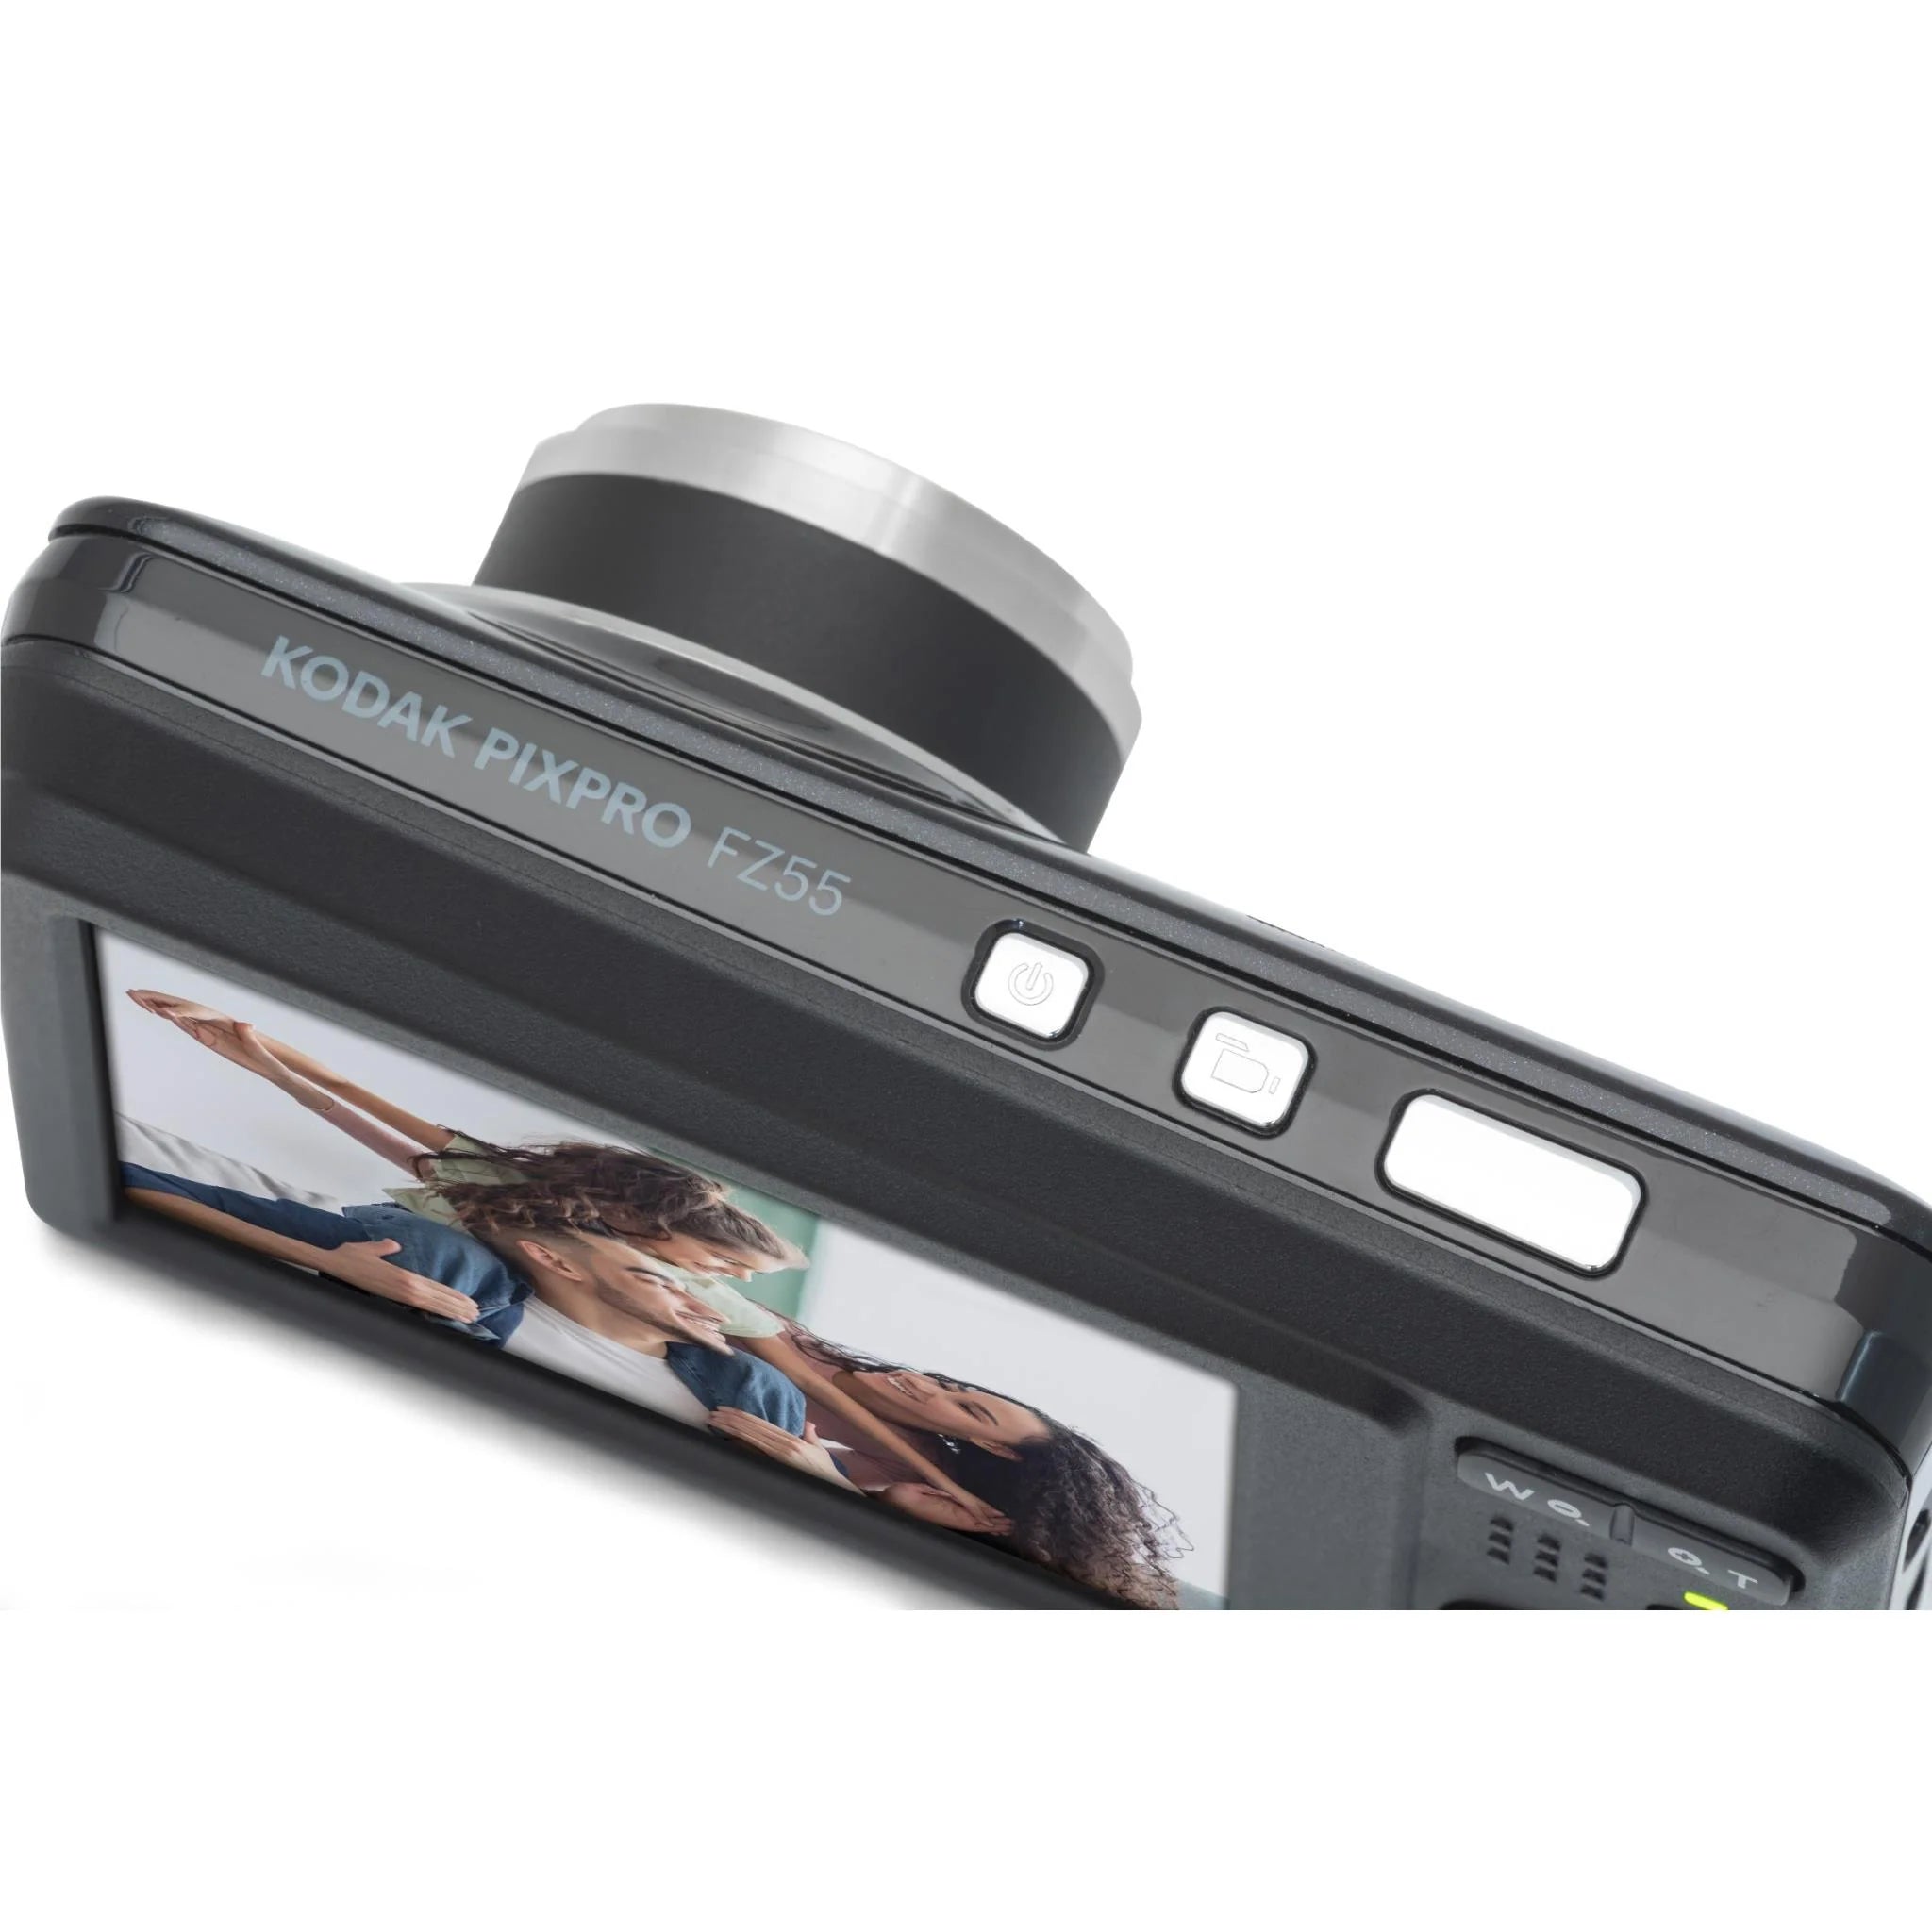 Kodak Pixpro Digital Camera (Black\Blue)